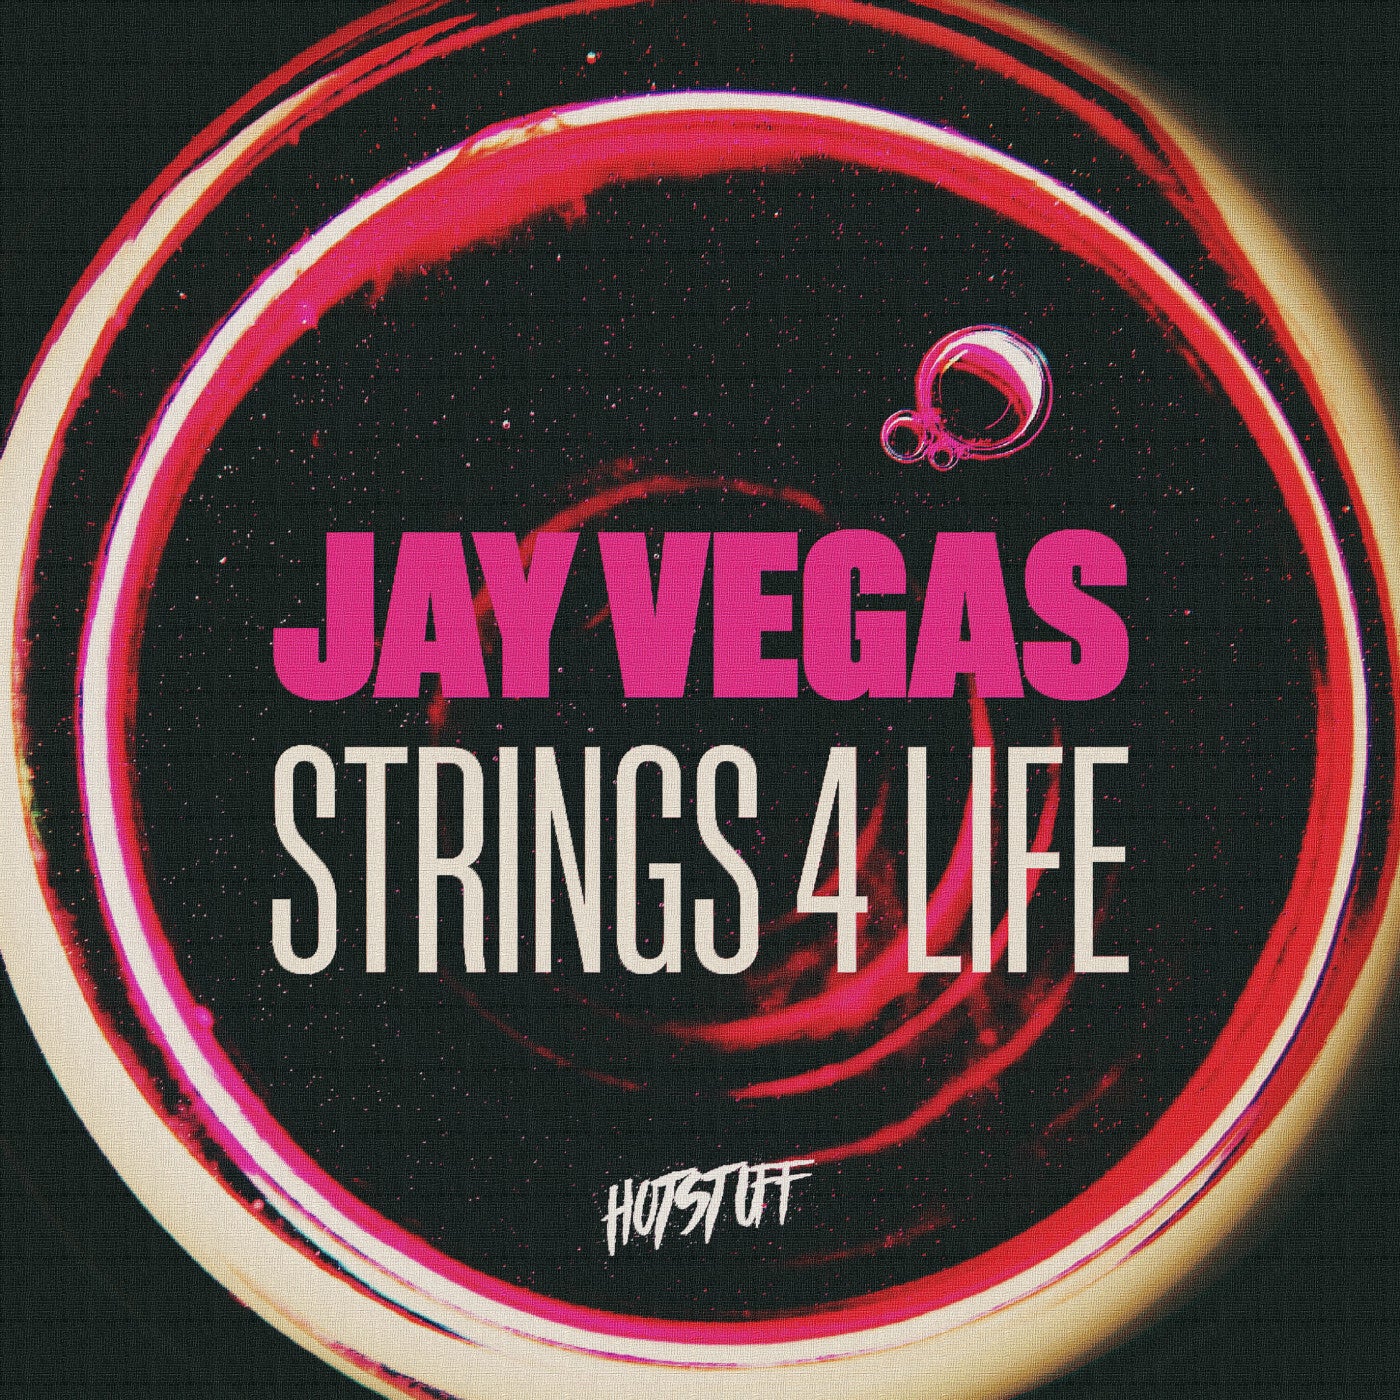 Strings 4 Life